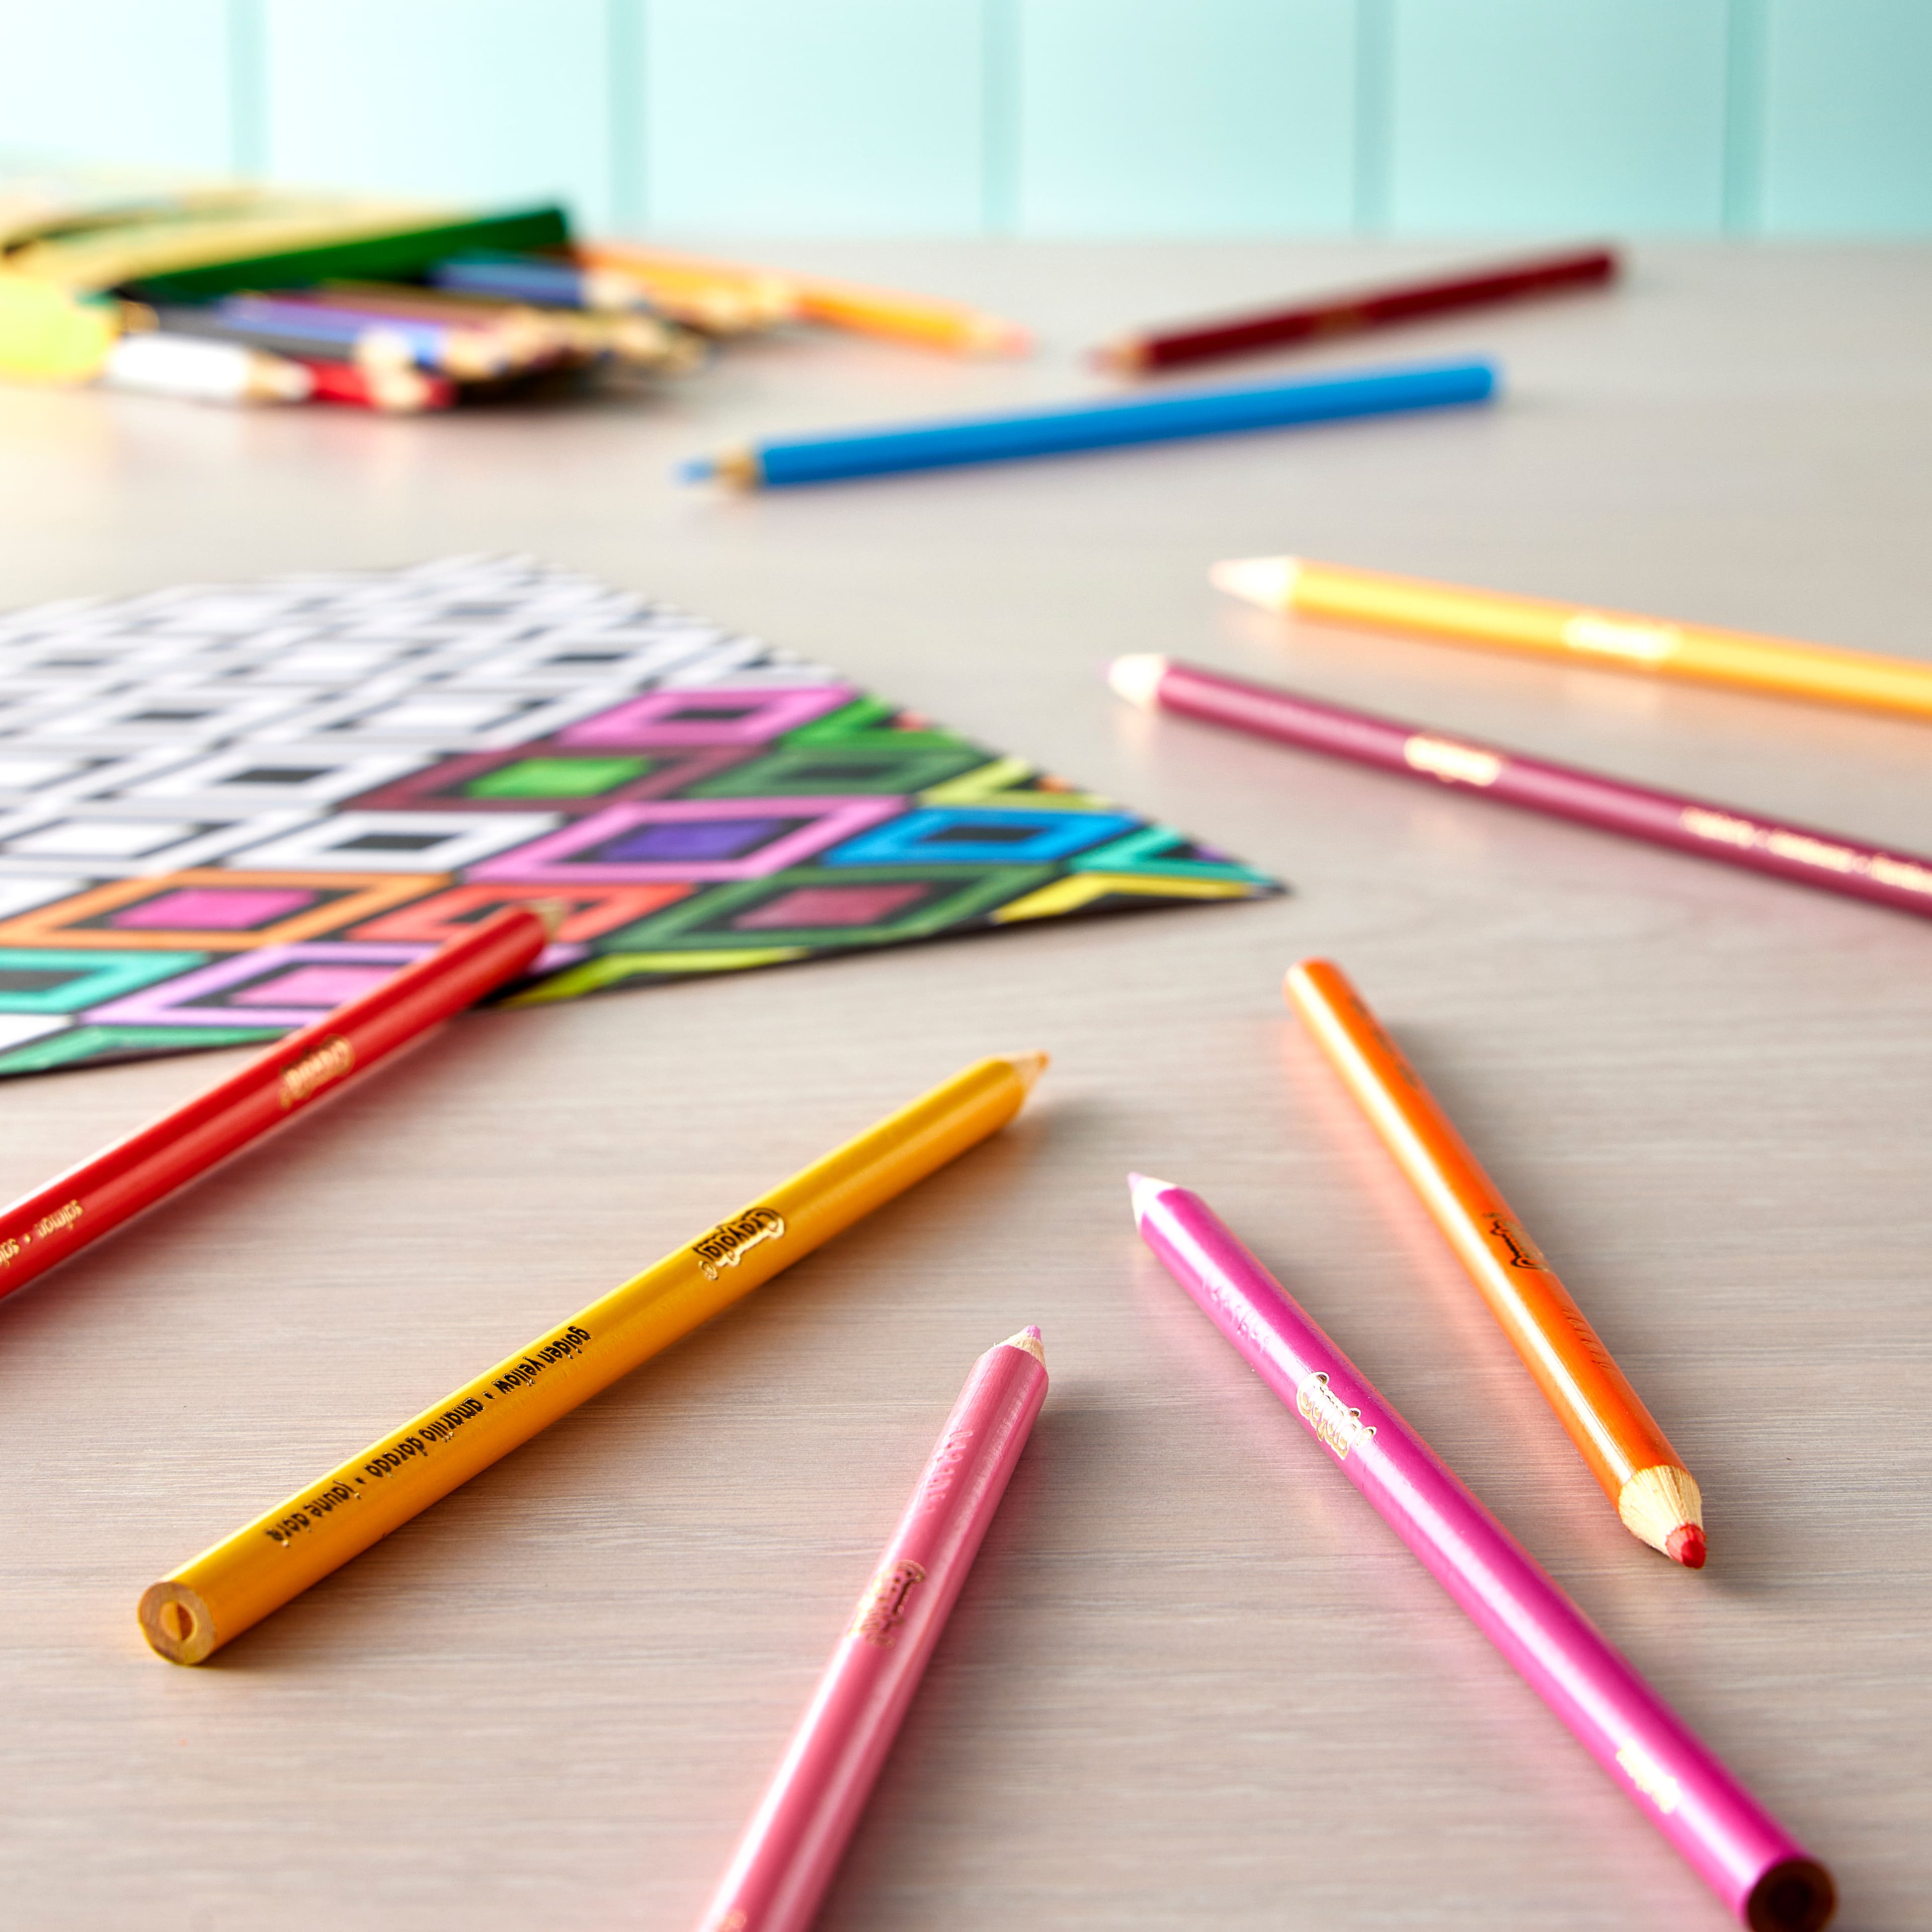 12 Packs: 12 ct. (144 total) Crayola&#xAE; Colored Pencils